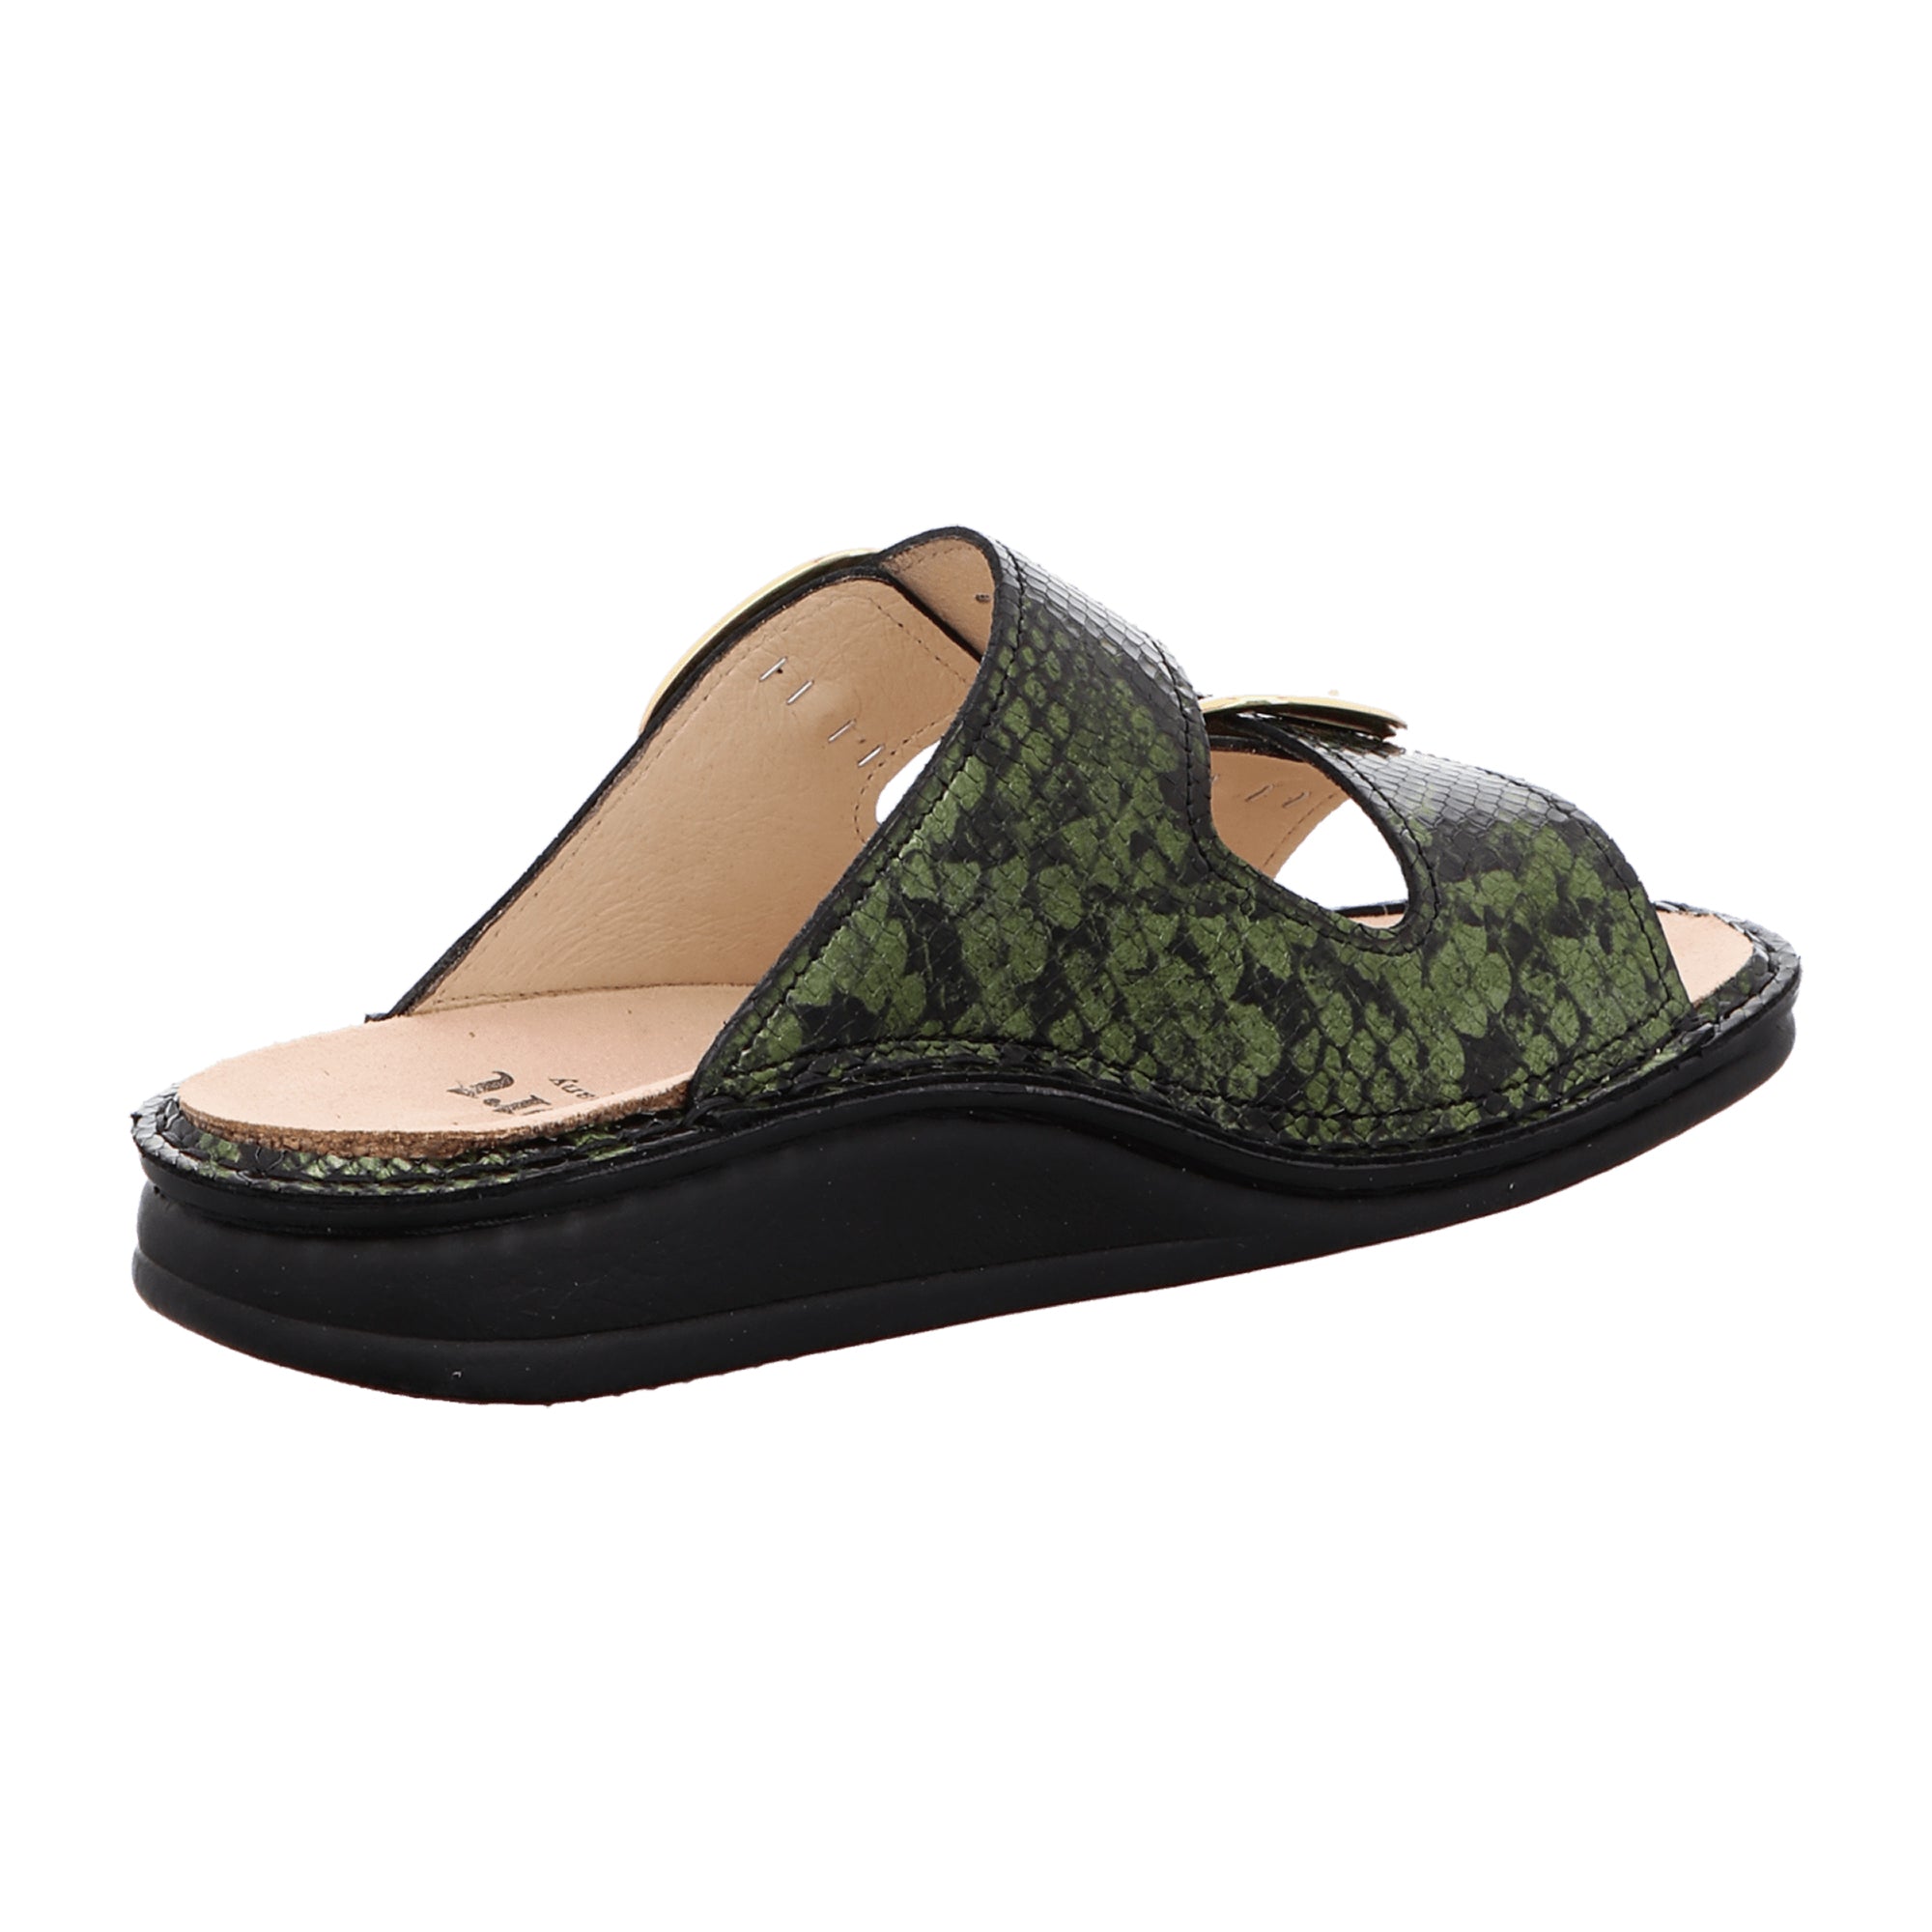 Finn Comfort Lipari 01545 - Stylish Green Comfort Shoes for Women